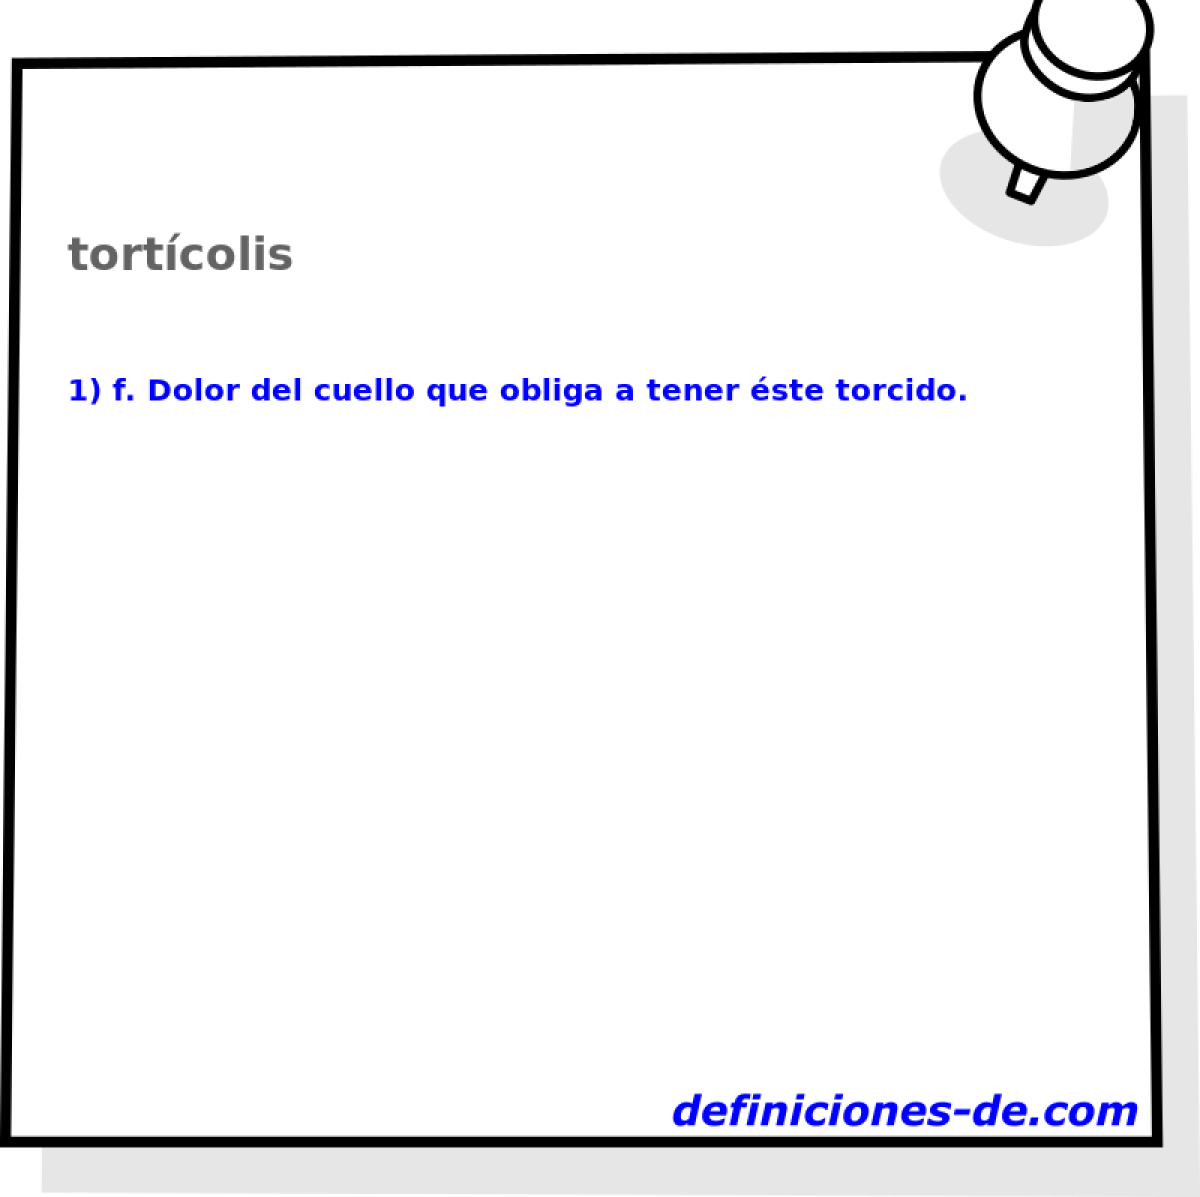 tortcolis 